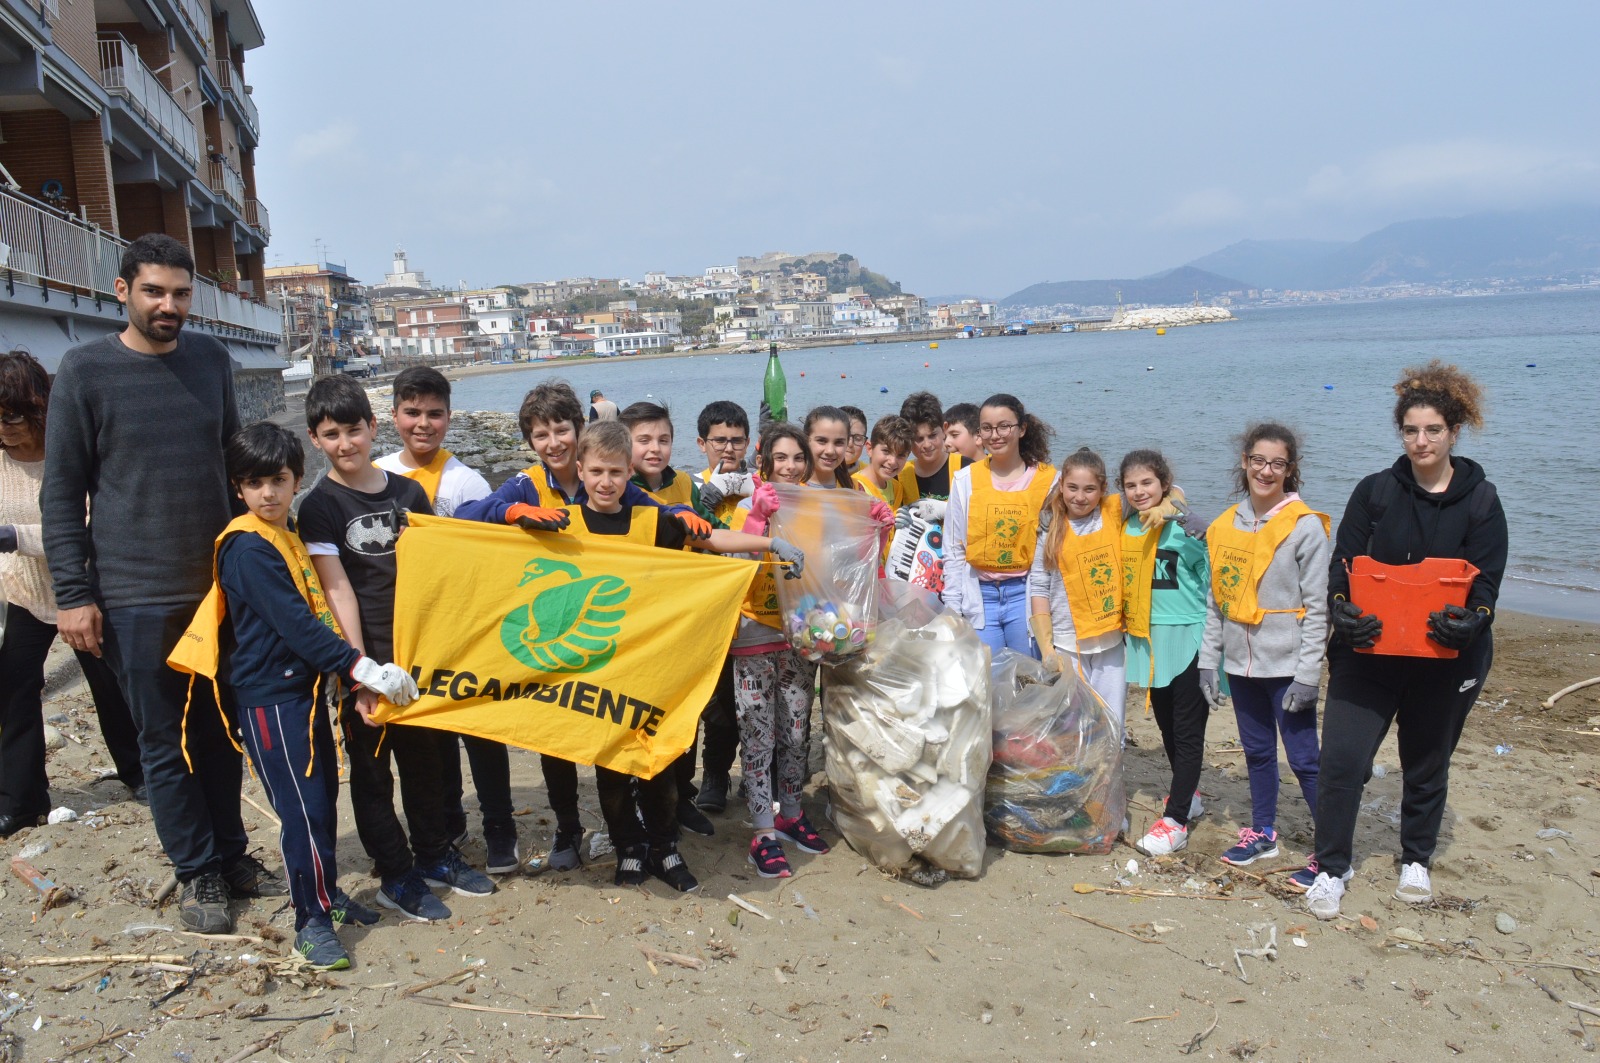 Legambiente: su 29 spiagge monitorate in Campania trovati una media di 647 rifiuti ogni 100 metri lineari di spiaggia